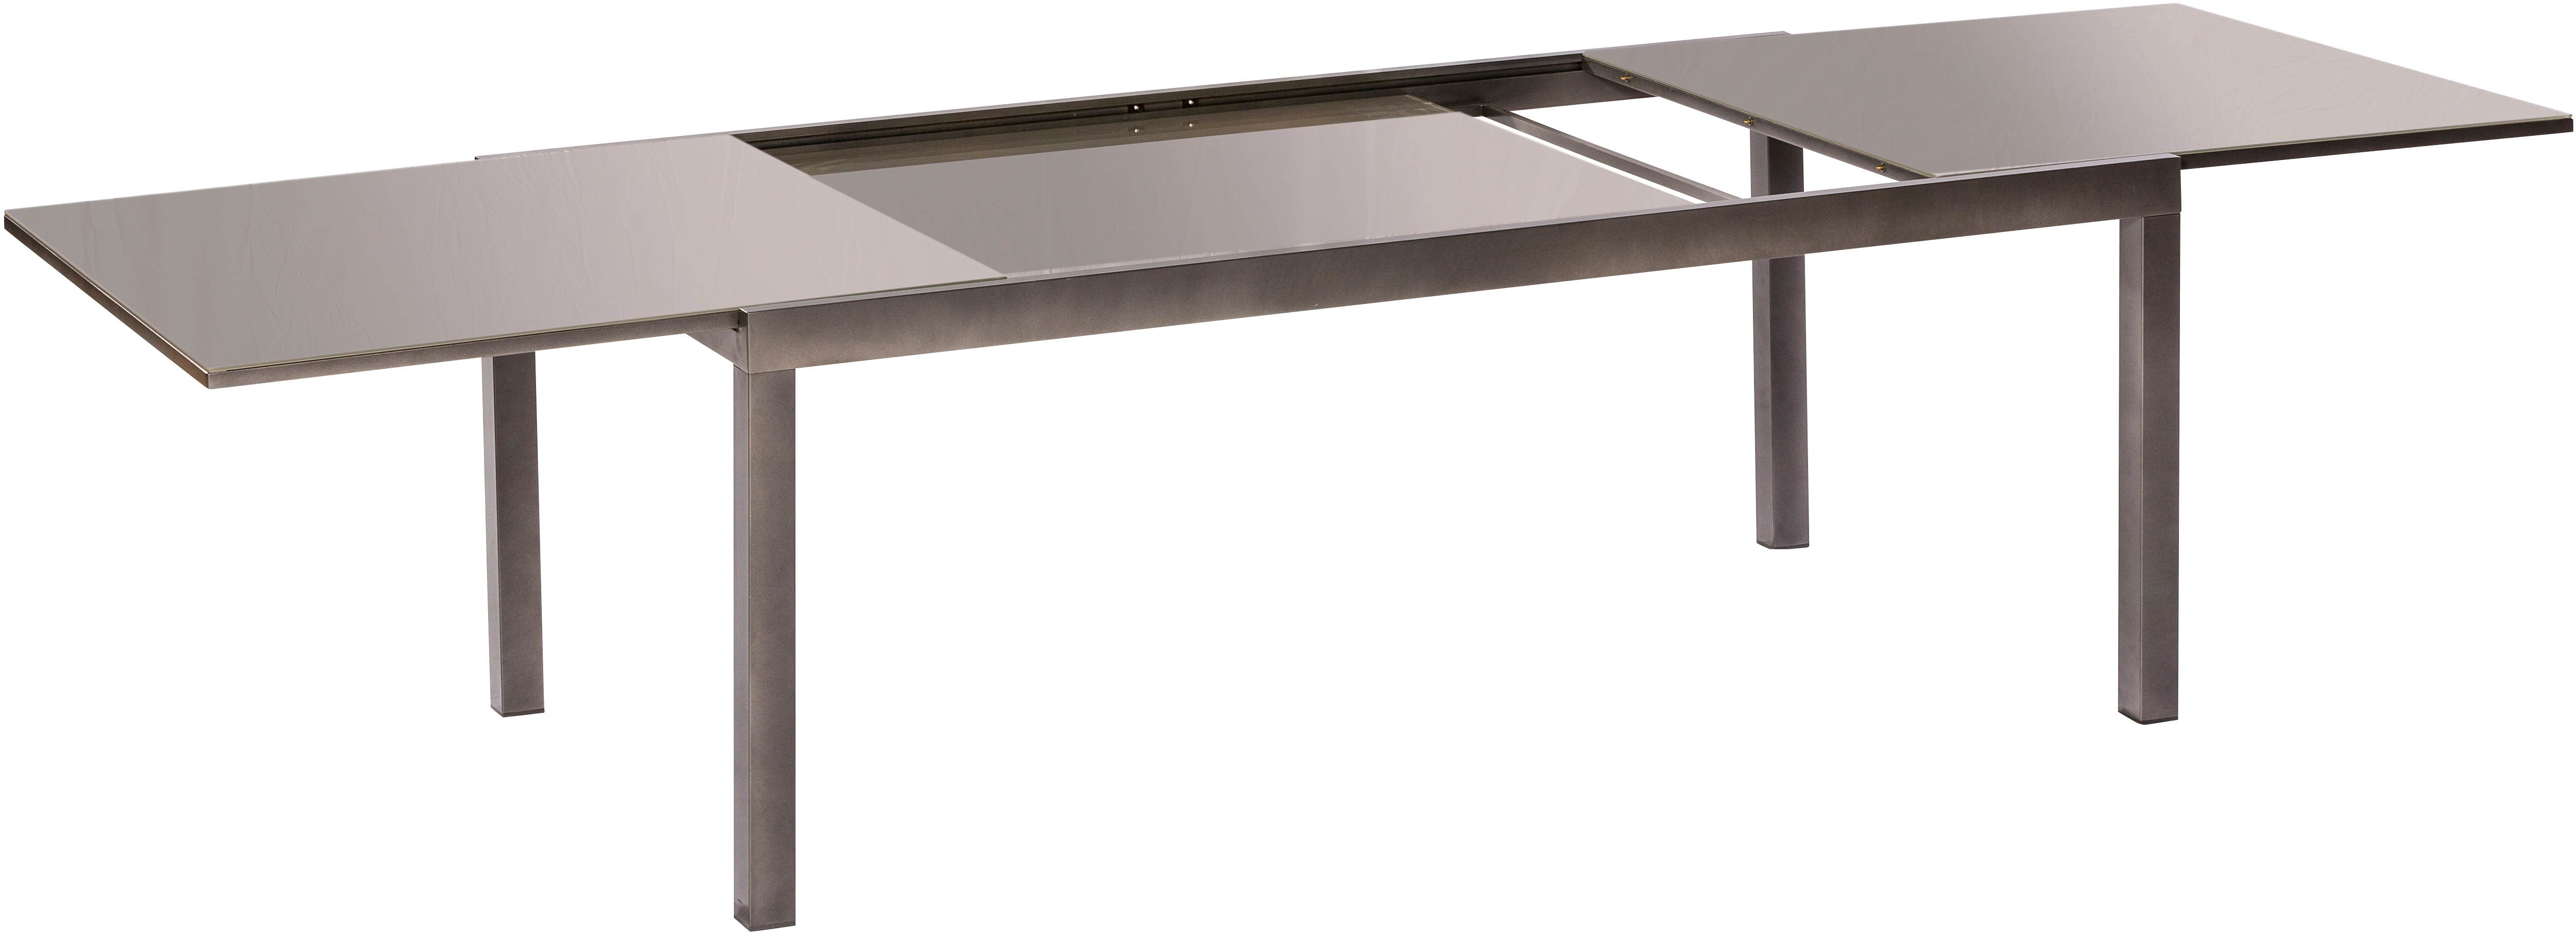 Merxx Gartentisch x 110 Grau bei Aluminium OBI cm Rechteckig kaufen 200/300 cm Ausziehbar Semi